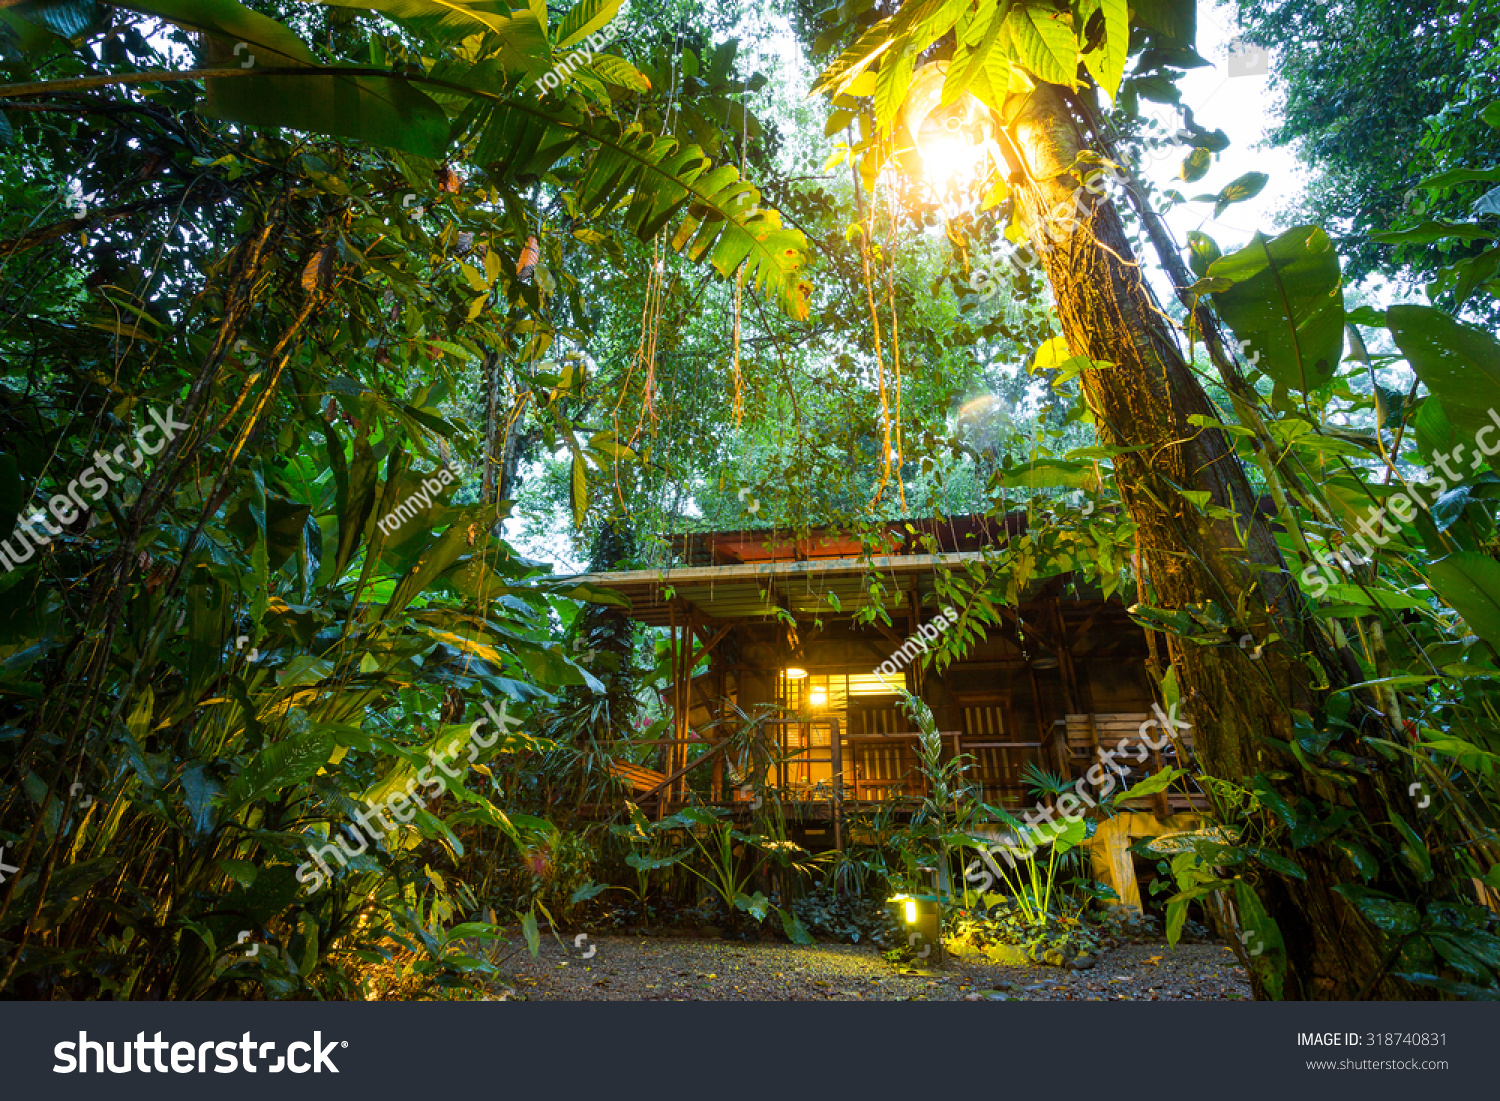 Costa Rica, eco lodge in the rainforest at Puerto Viejo de Talamanca, luxury lodging #318740831